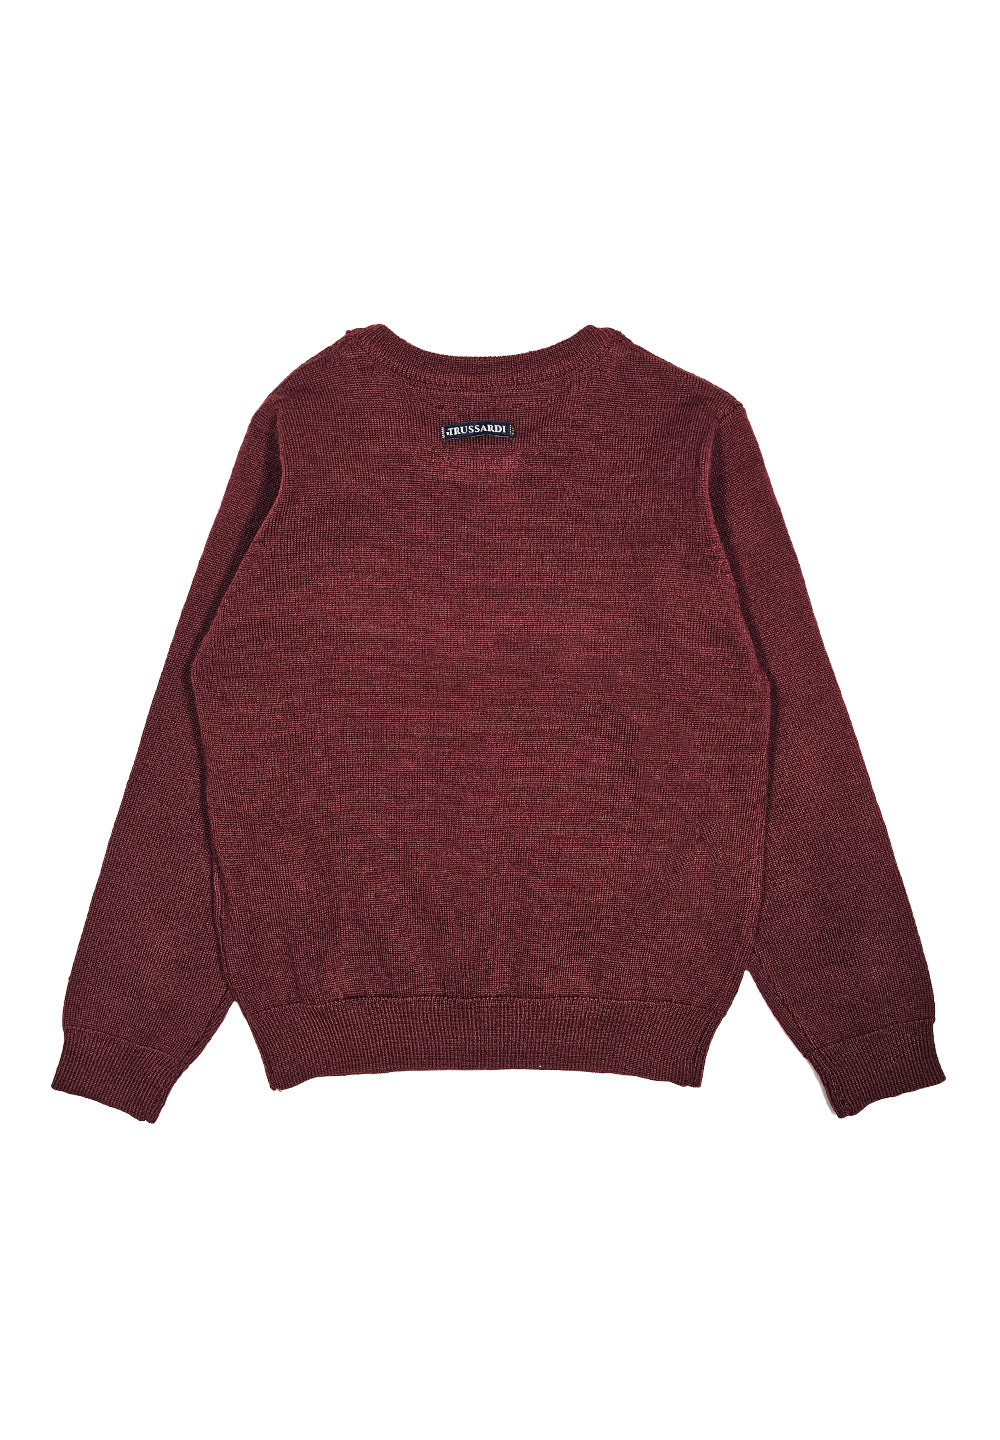 Brown sweater for newborn